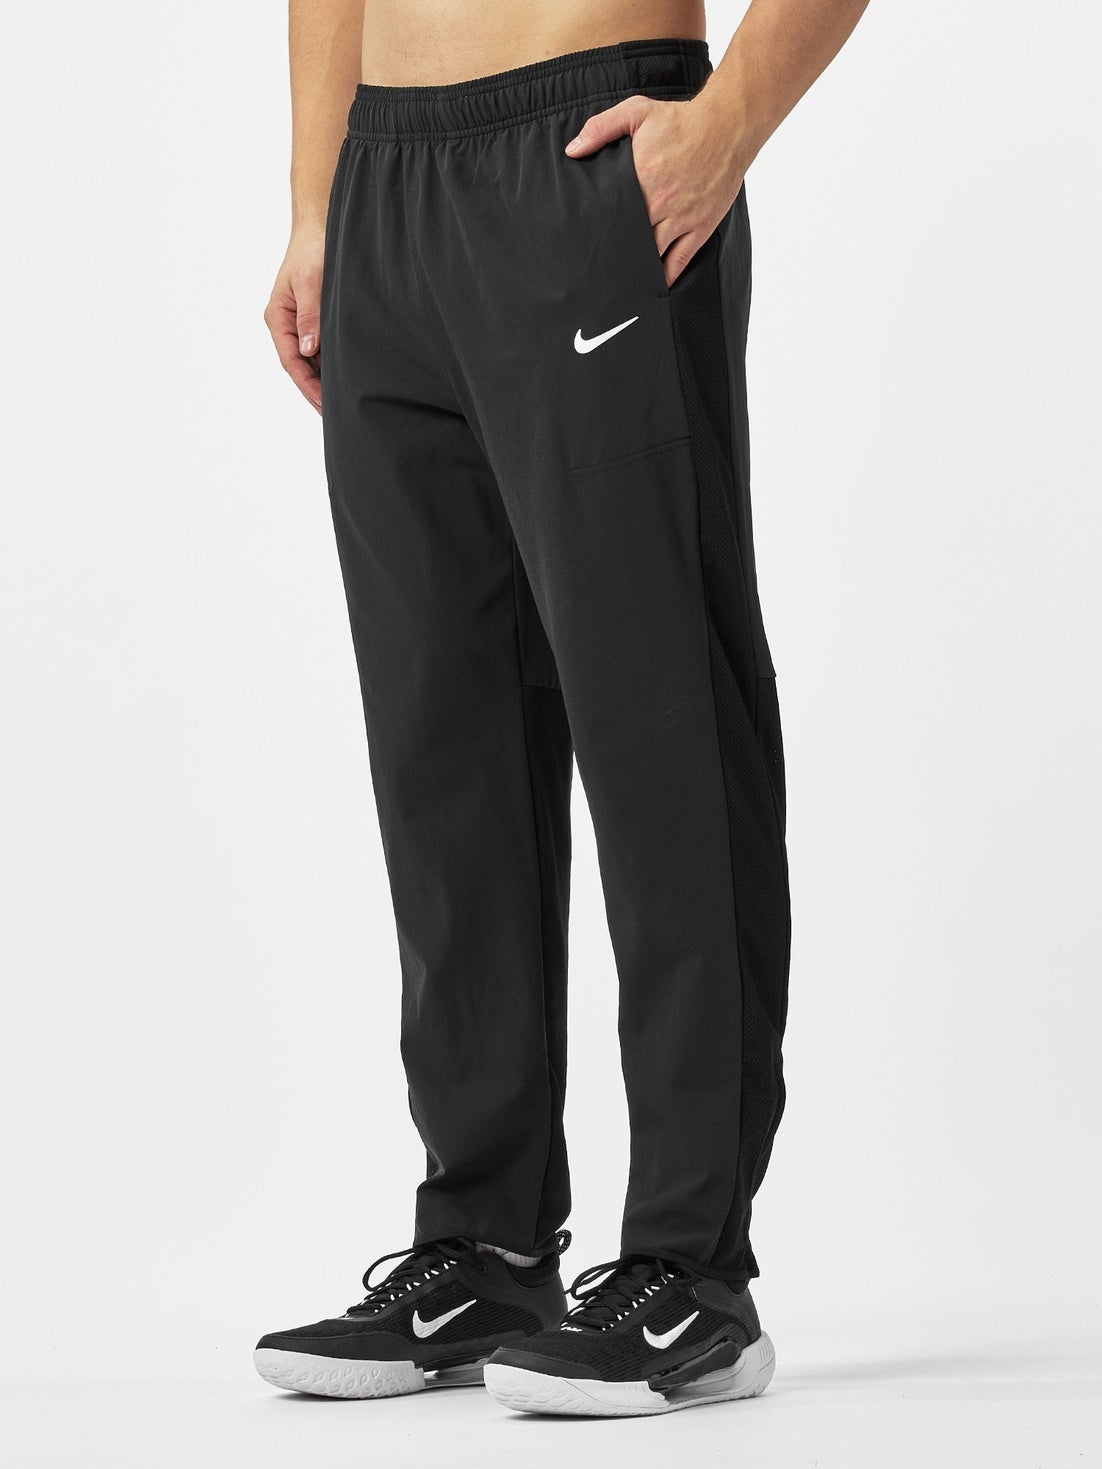 Nike Men's Core Advantage Pant - Black | Tennis Warehouse